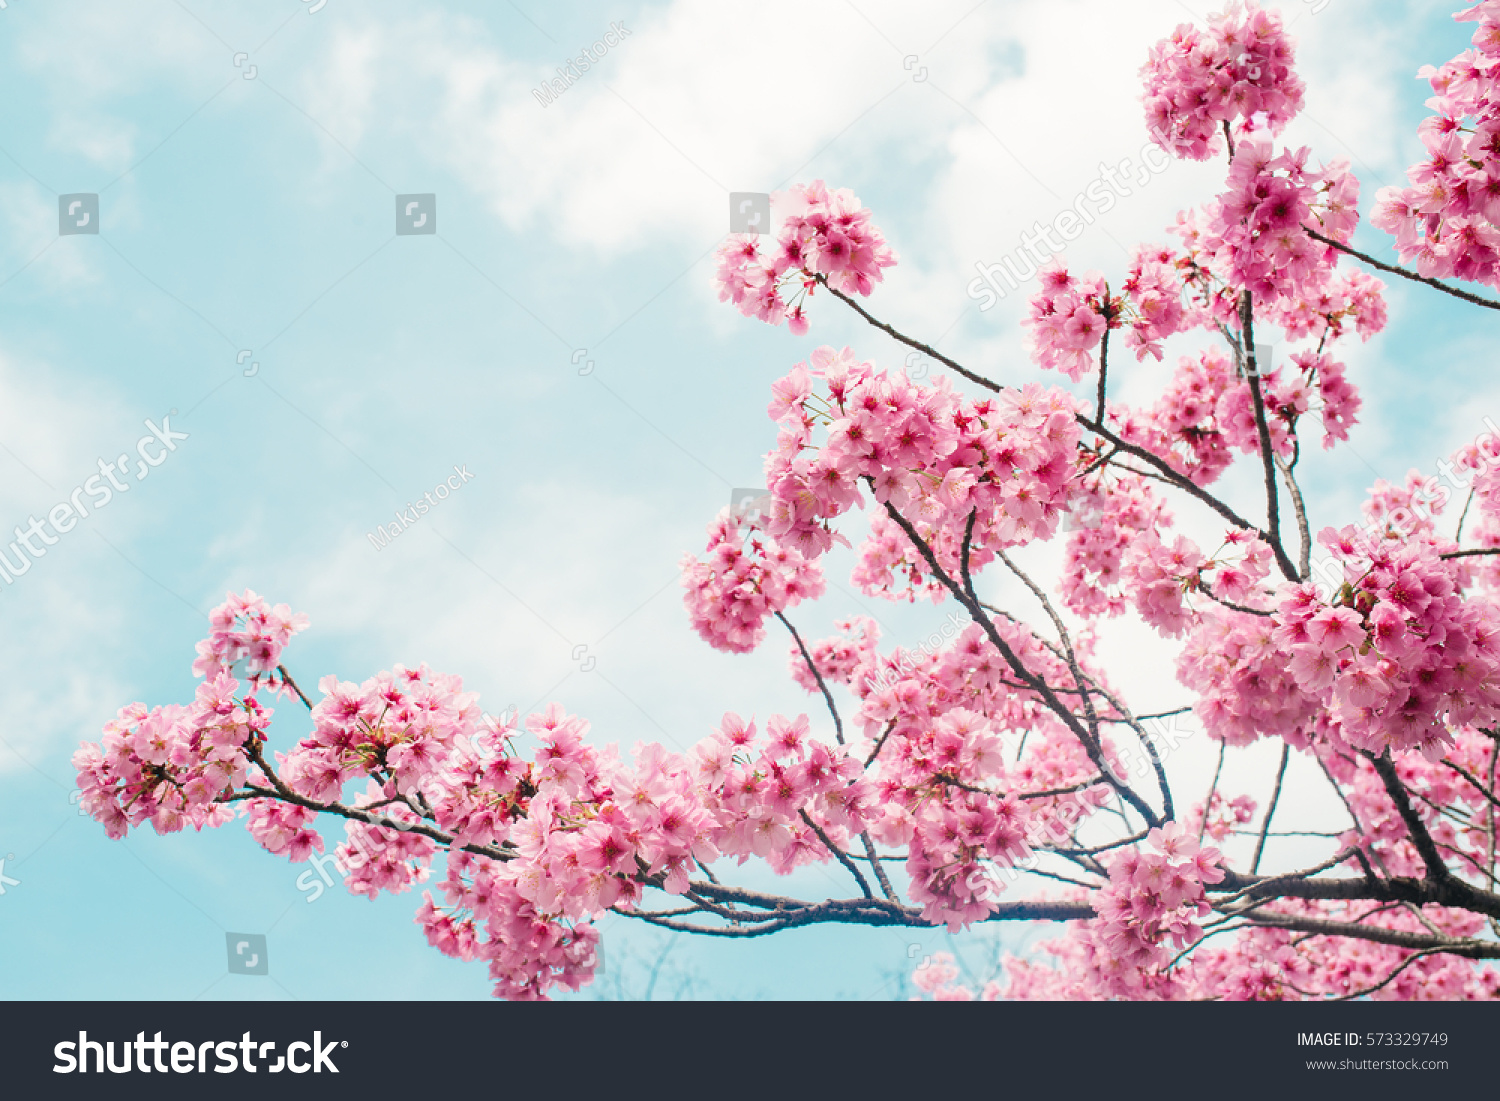 Beautiful cherry blossom sakura in spring time over blue sky. #573329749